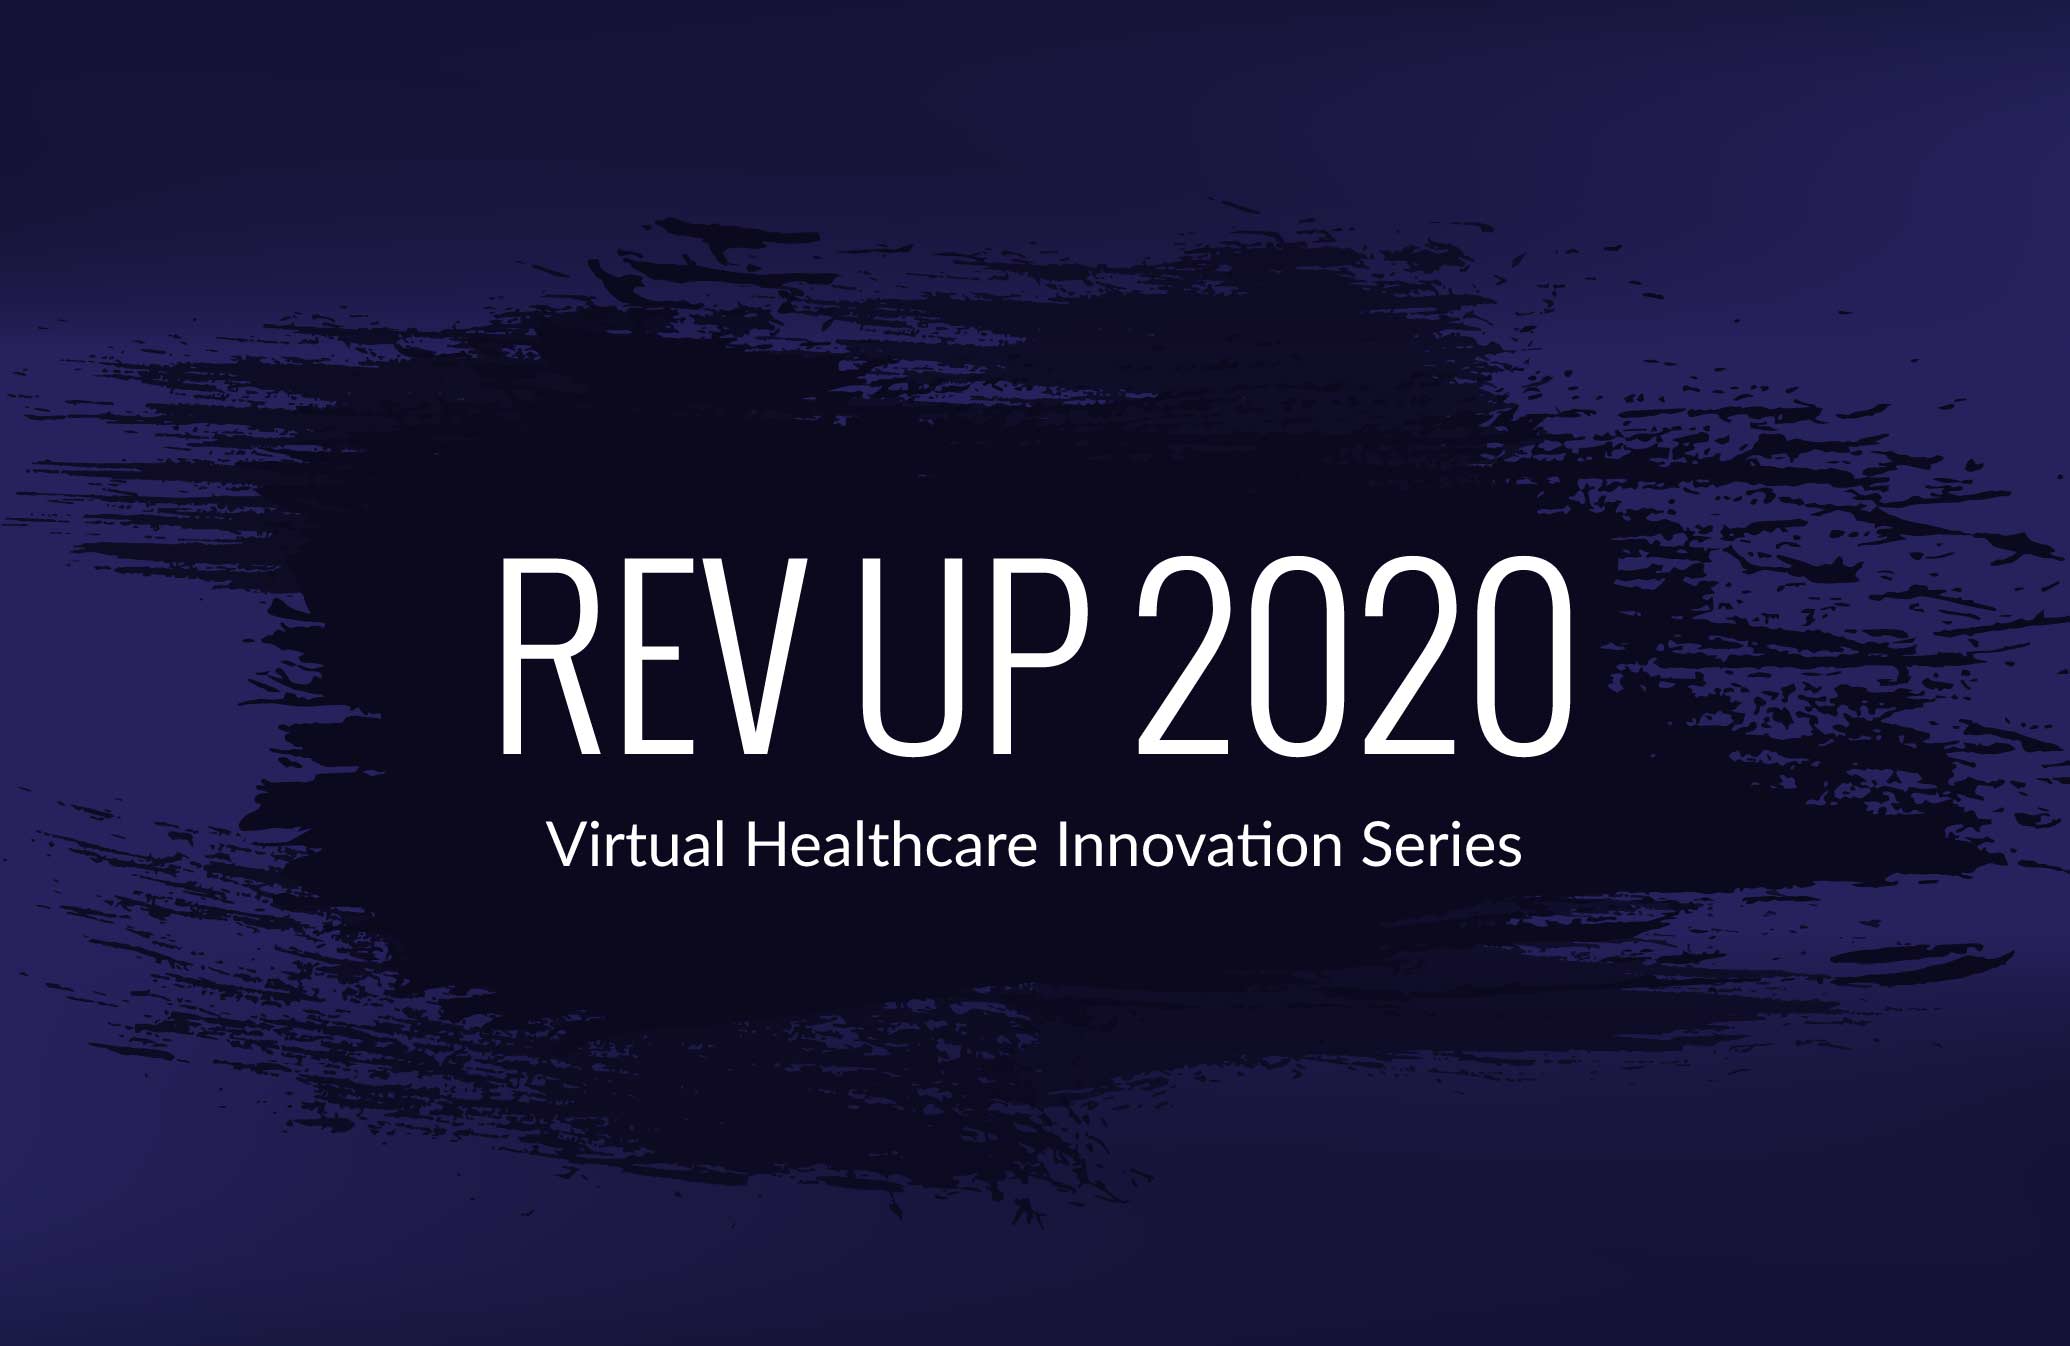 Rev Up 2020 Virtual Healthcare Innovation Series